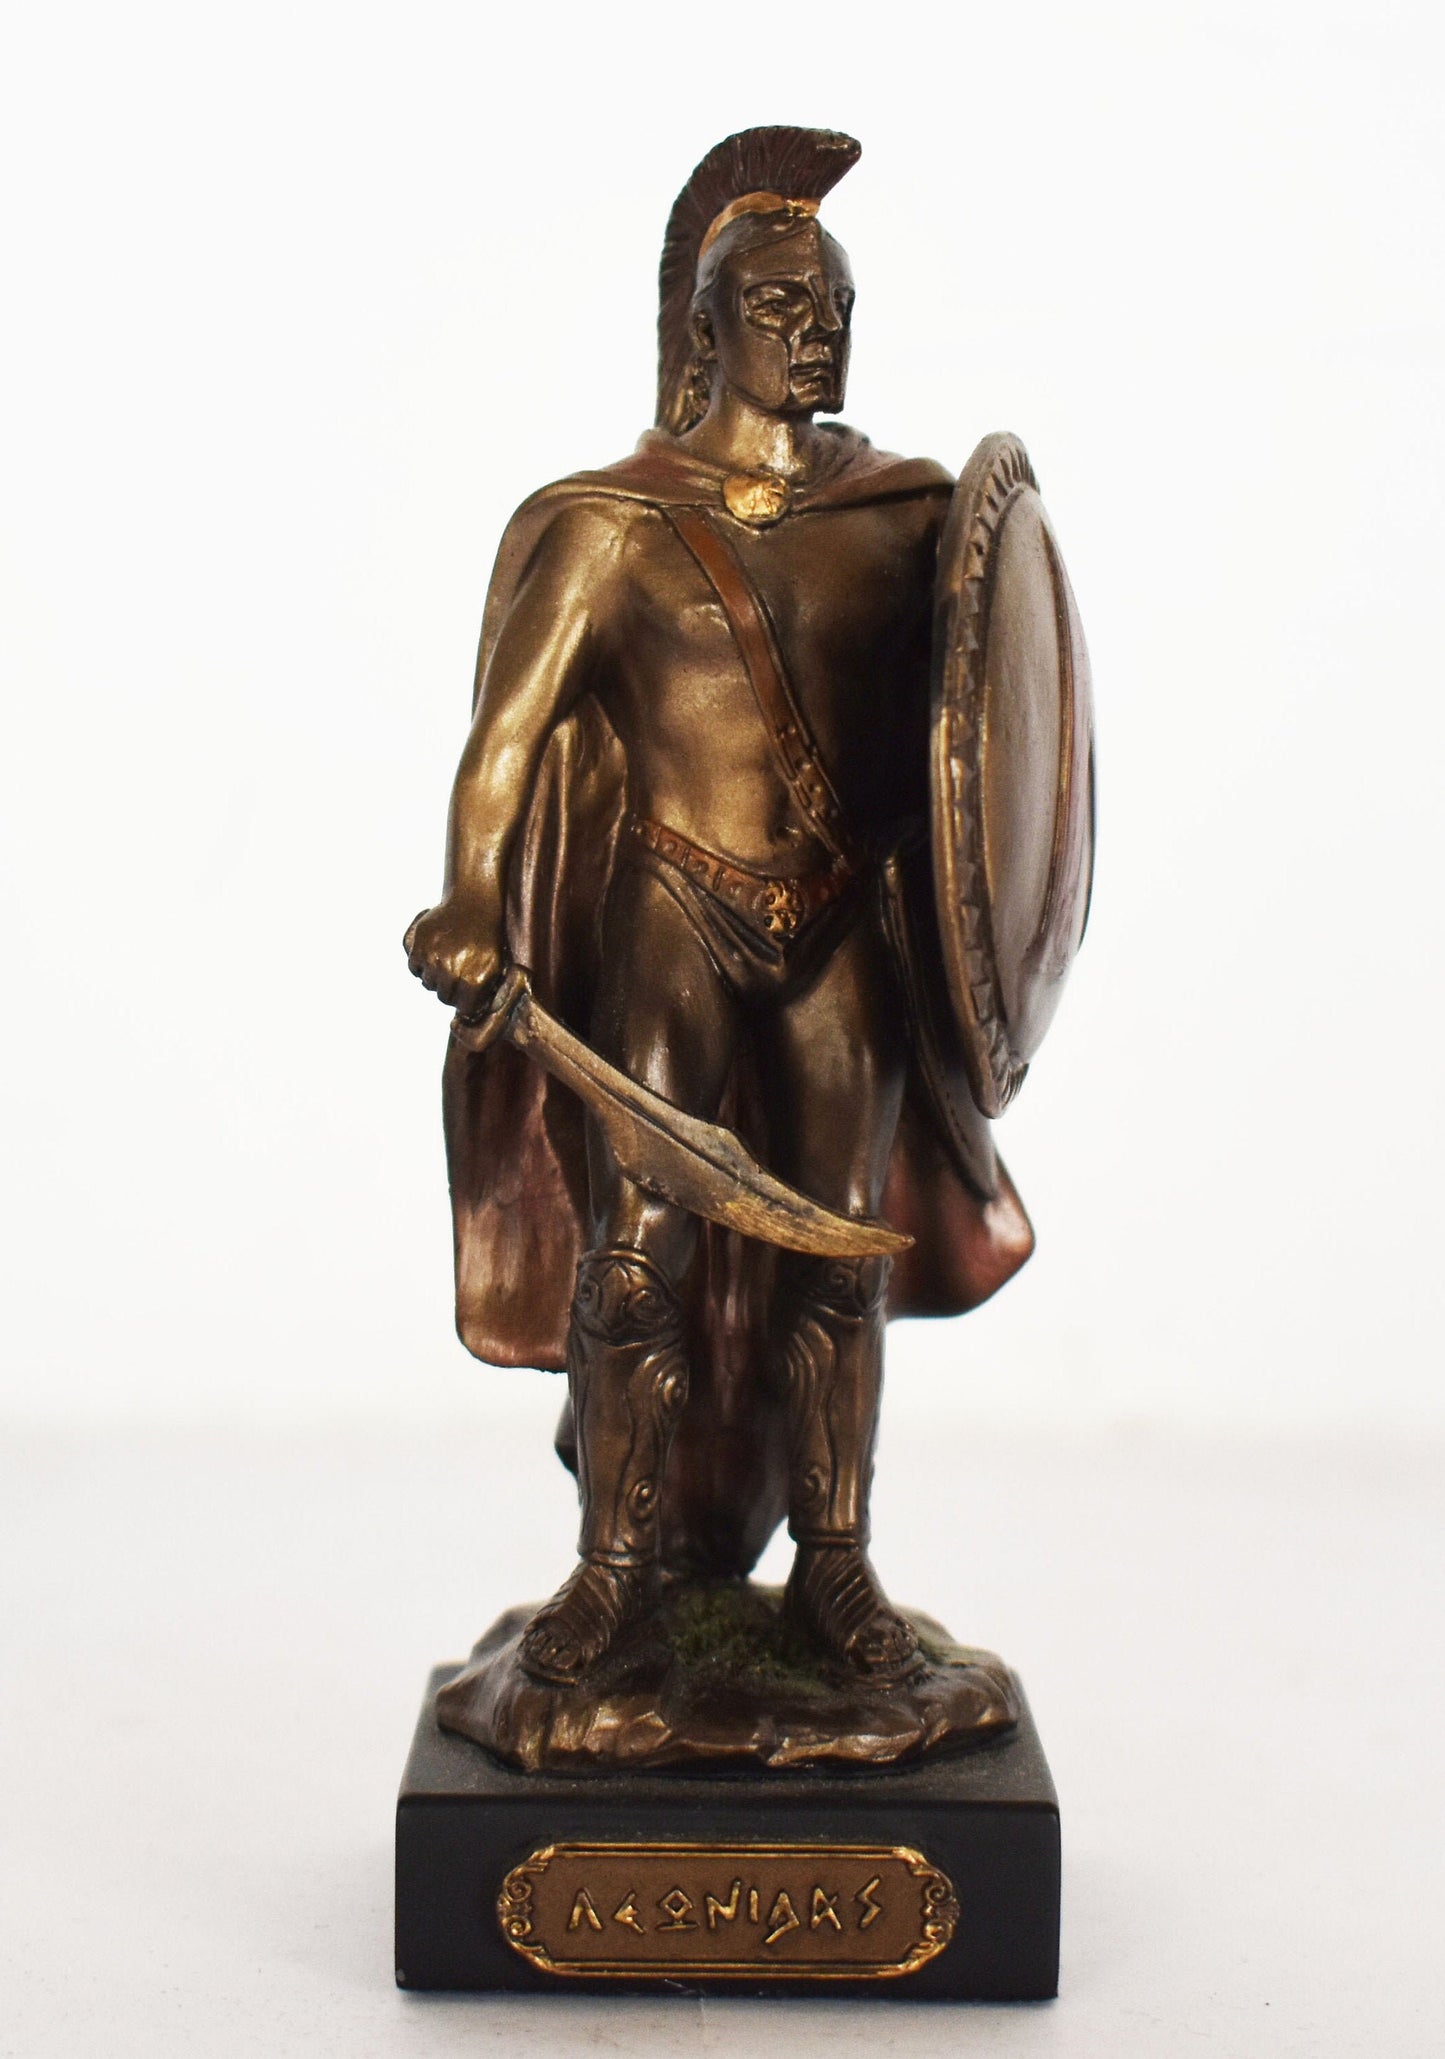 Leonidas Mini - Spartan King - Leader of 300 - Battle of Thermopylae - 480 BC - Molon Labe, Come and Take Them - Cold Cast Bronze Resin